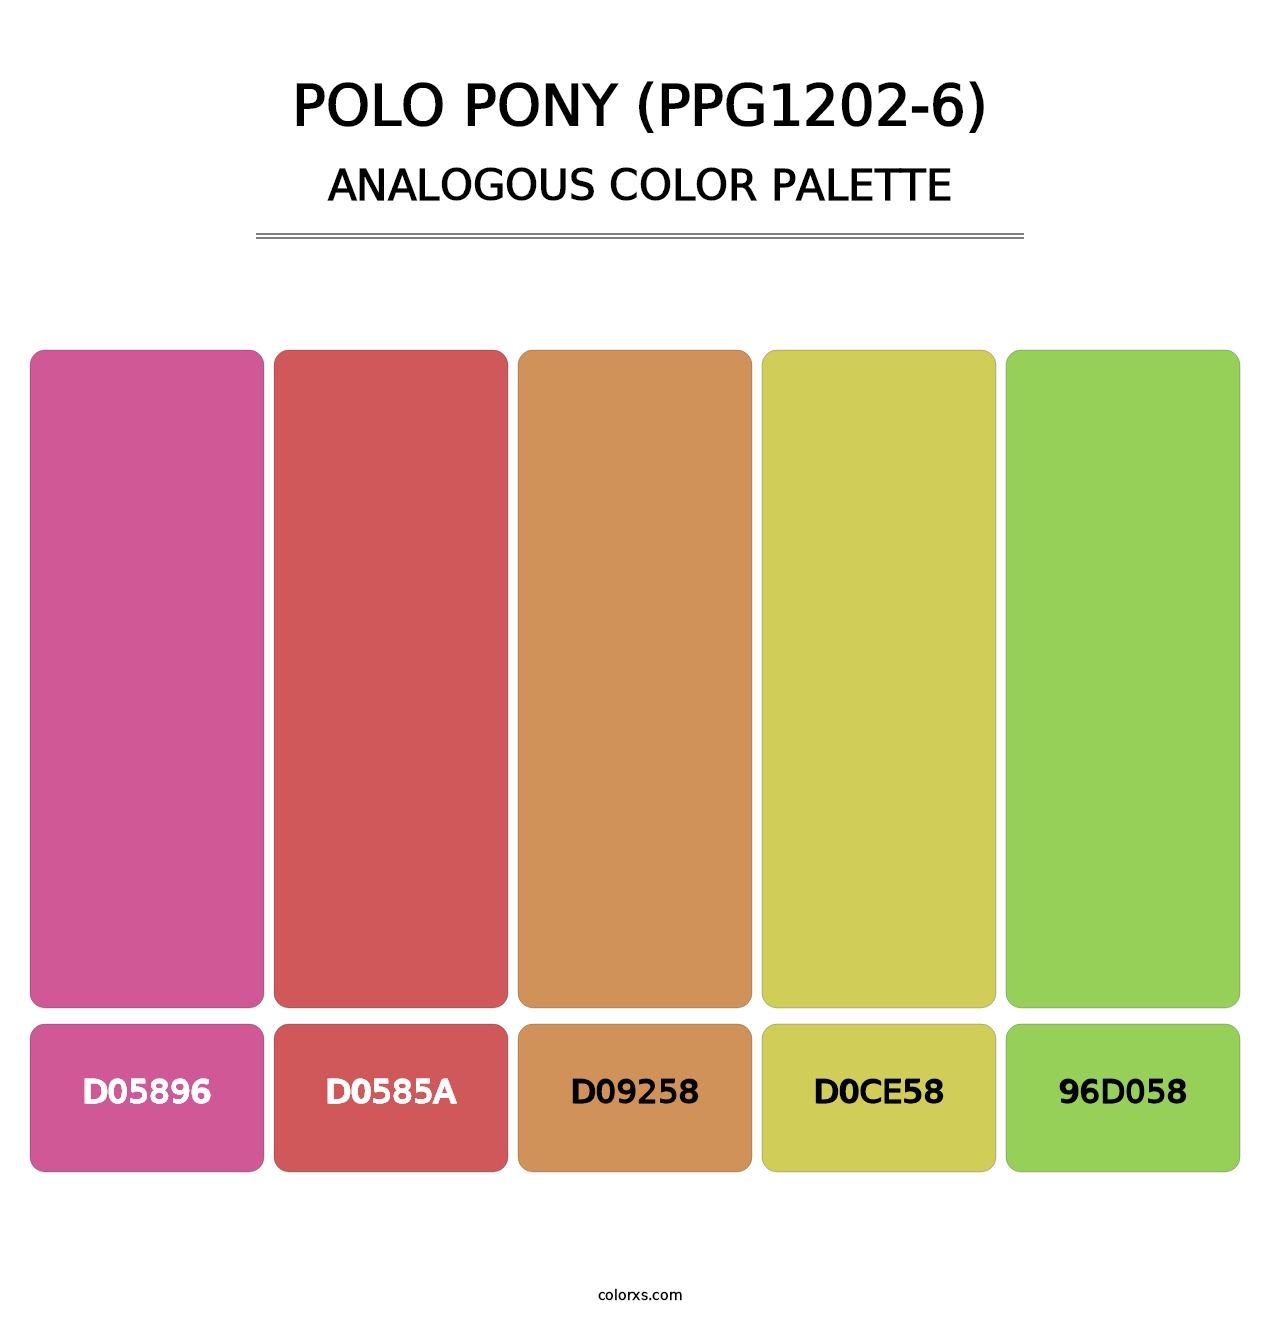 Polo Pony (PPG1202-6) - Analogous Color Palette